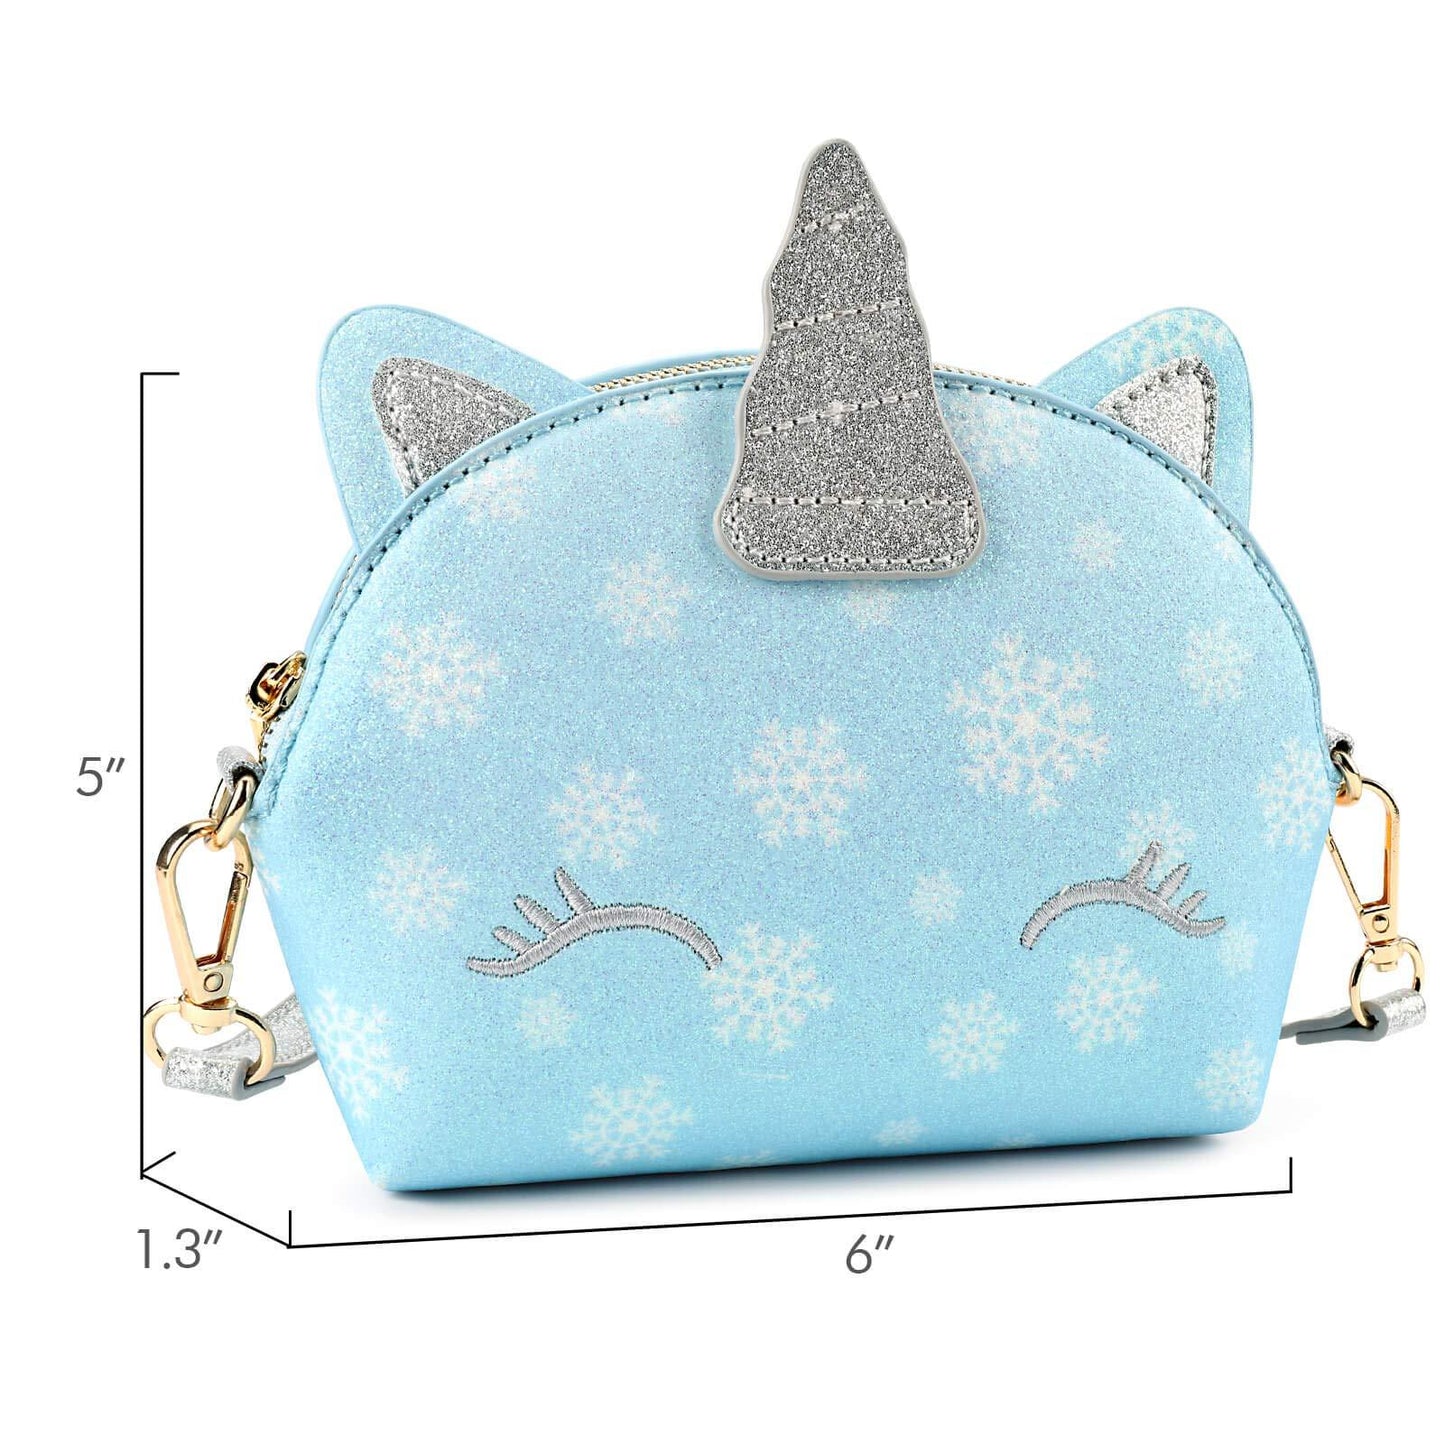 Unicorn Duffle Bags for Girls – mibasies